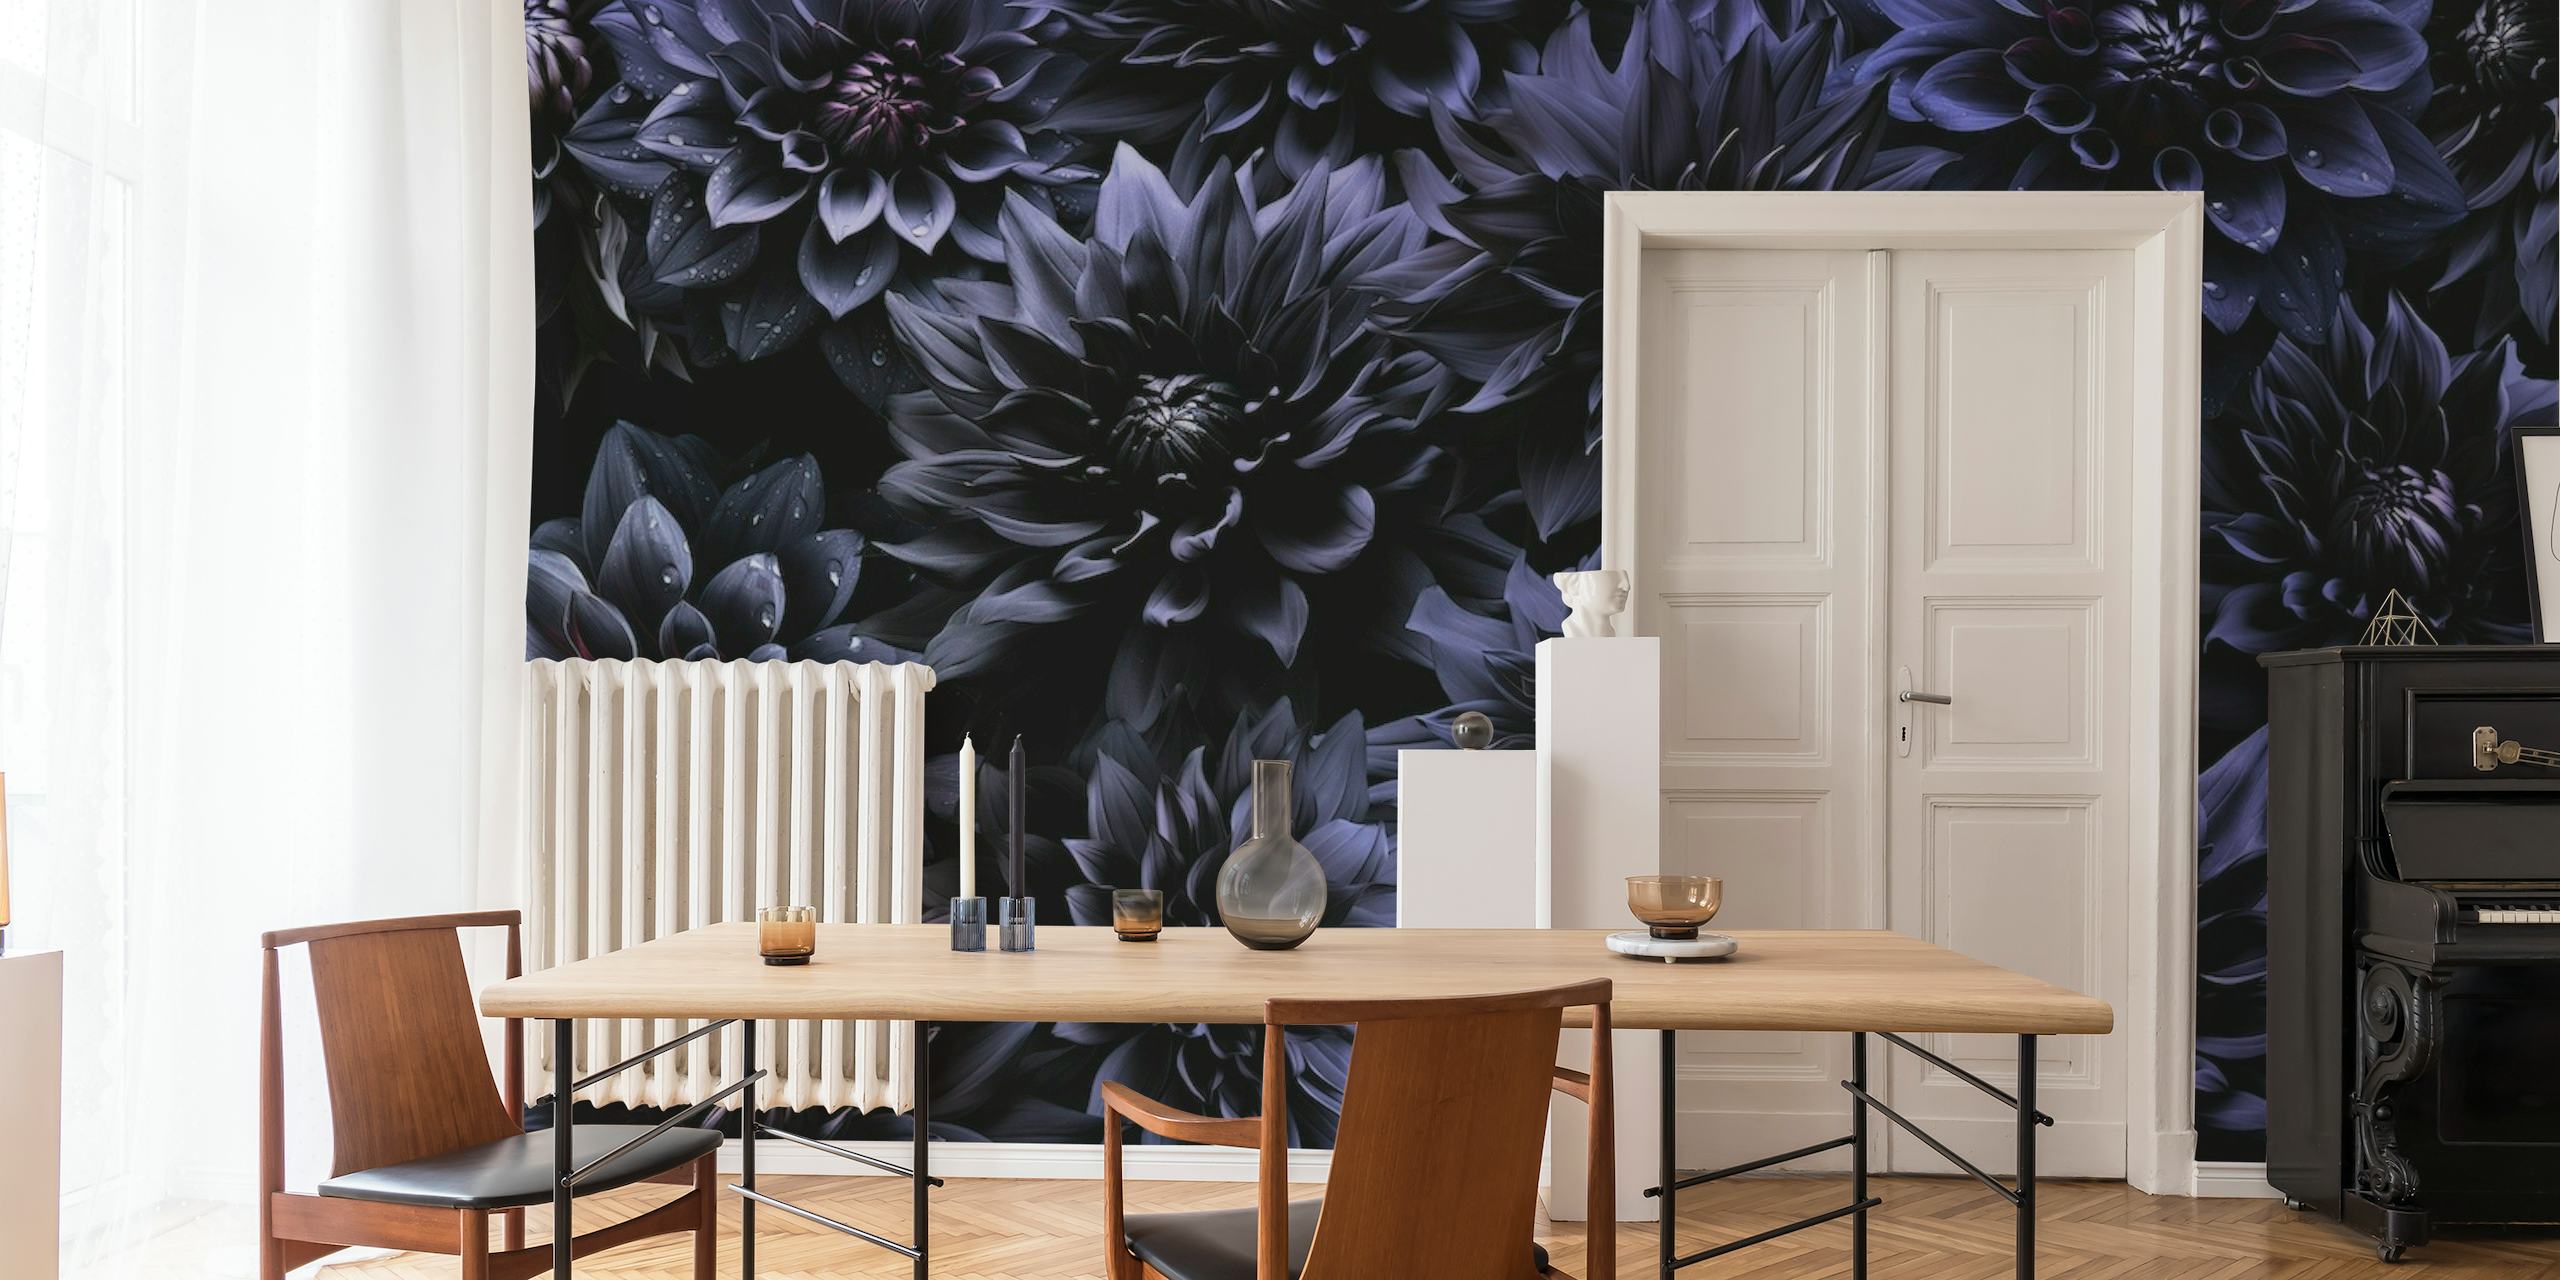 Blue Mystic Gothic Flower Night Garden wallpaper - Free shipping ...